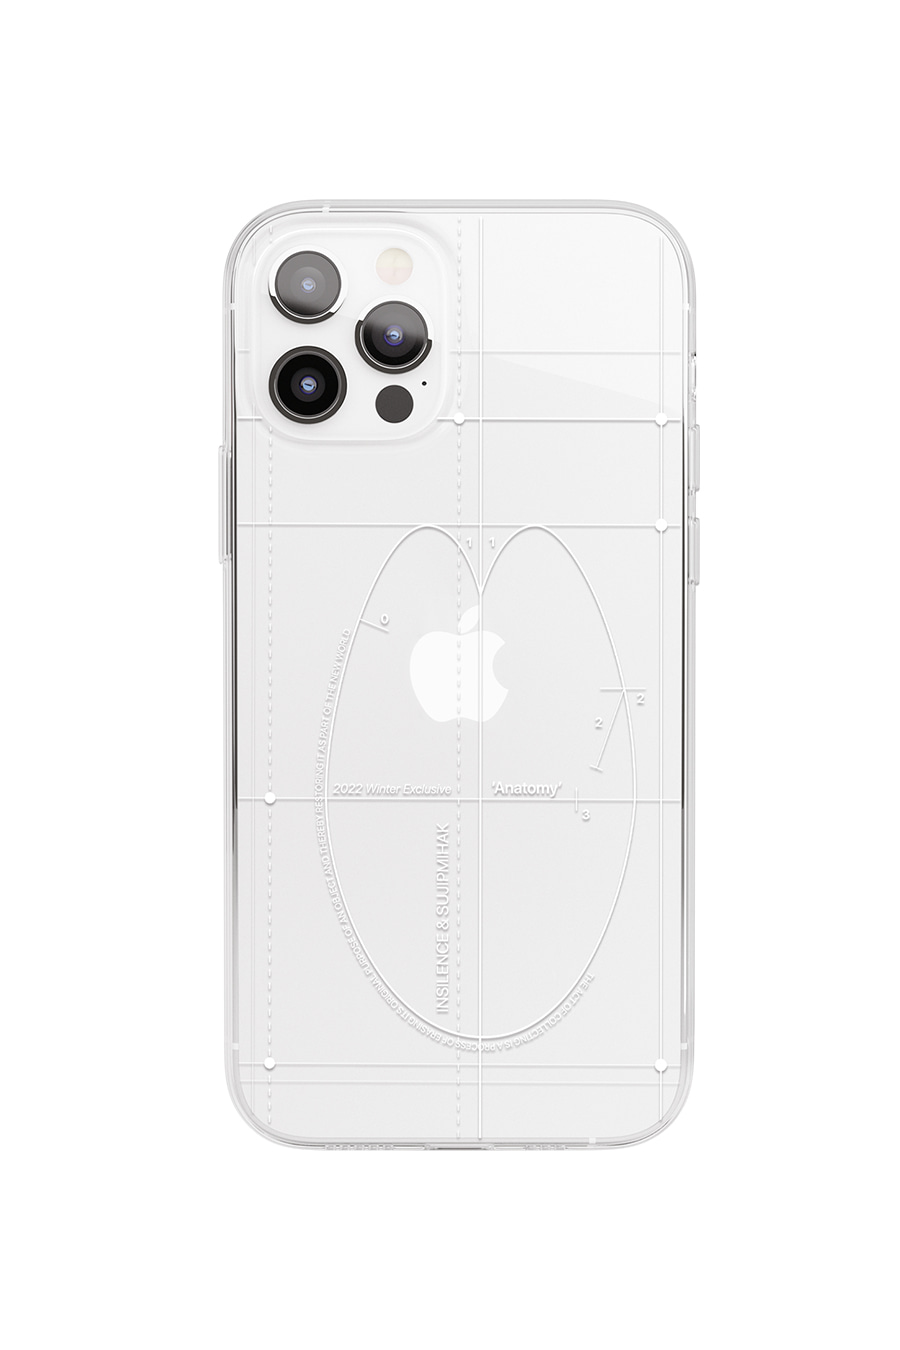 [Sujipmihak] Anatomy iPhone Case